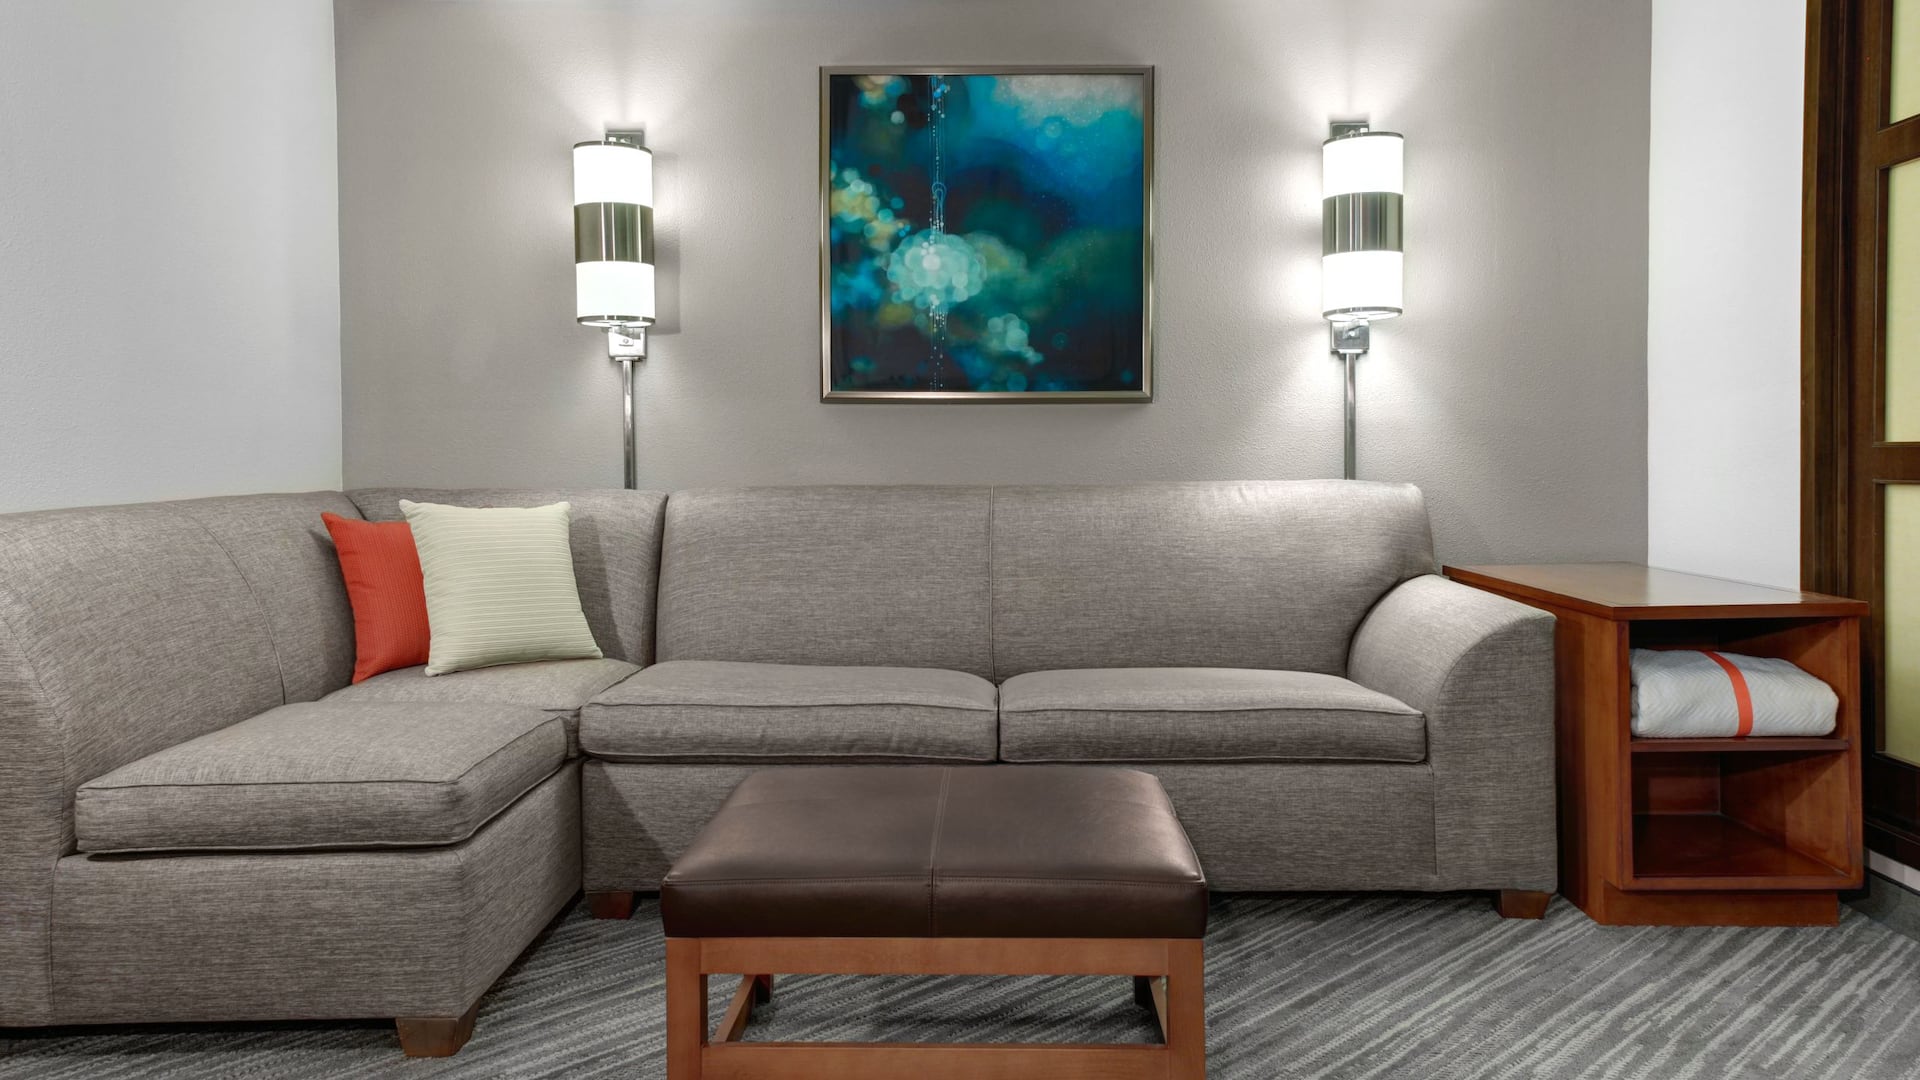 Cincinnati Airport hotel guestroom sofa in living room area at Hyatt Place Cincinnati Airport / Florence